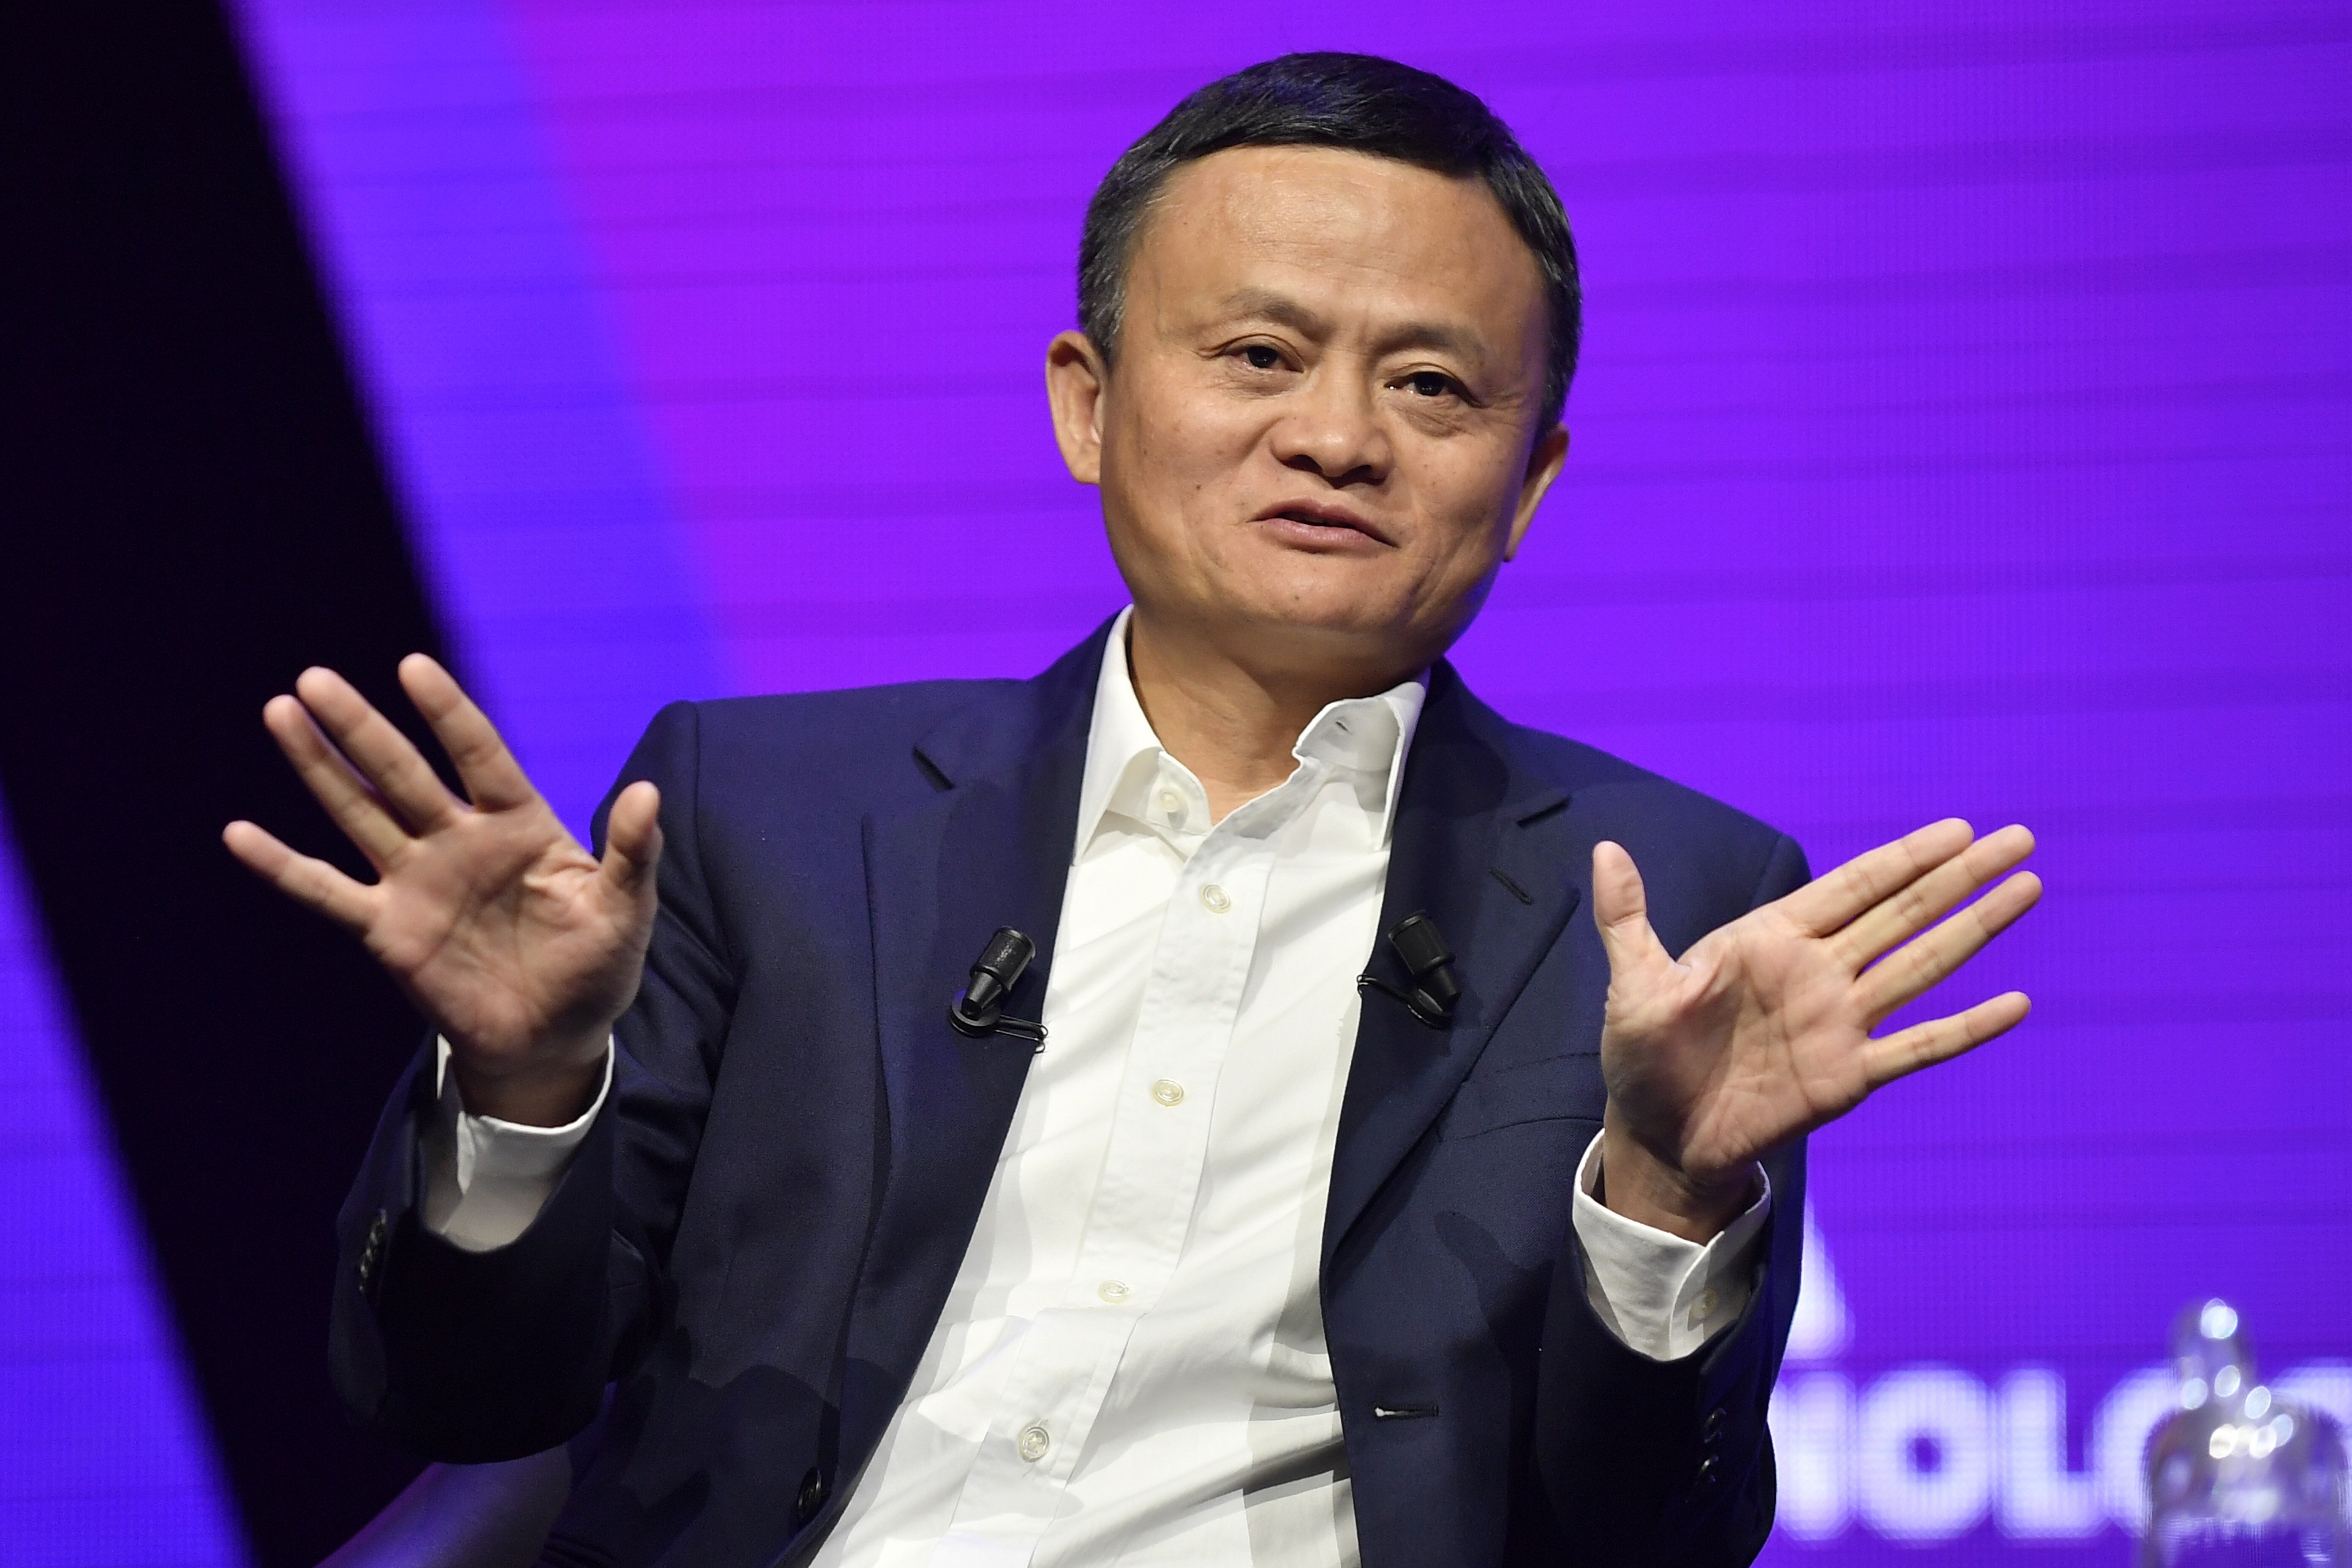 Jack Ma stepped down as chairman of e-commerce giant Alibaba a year ago. Photo: EPA-EFE